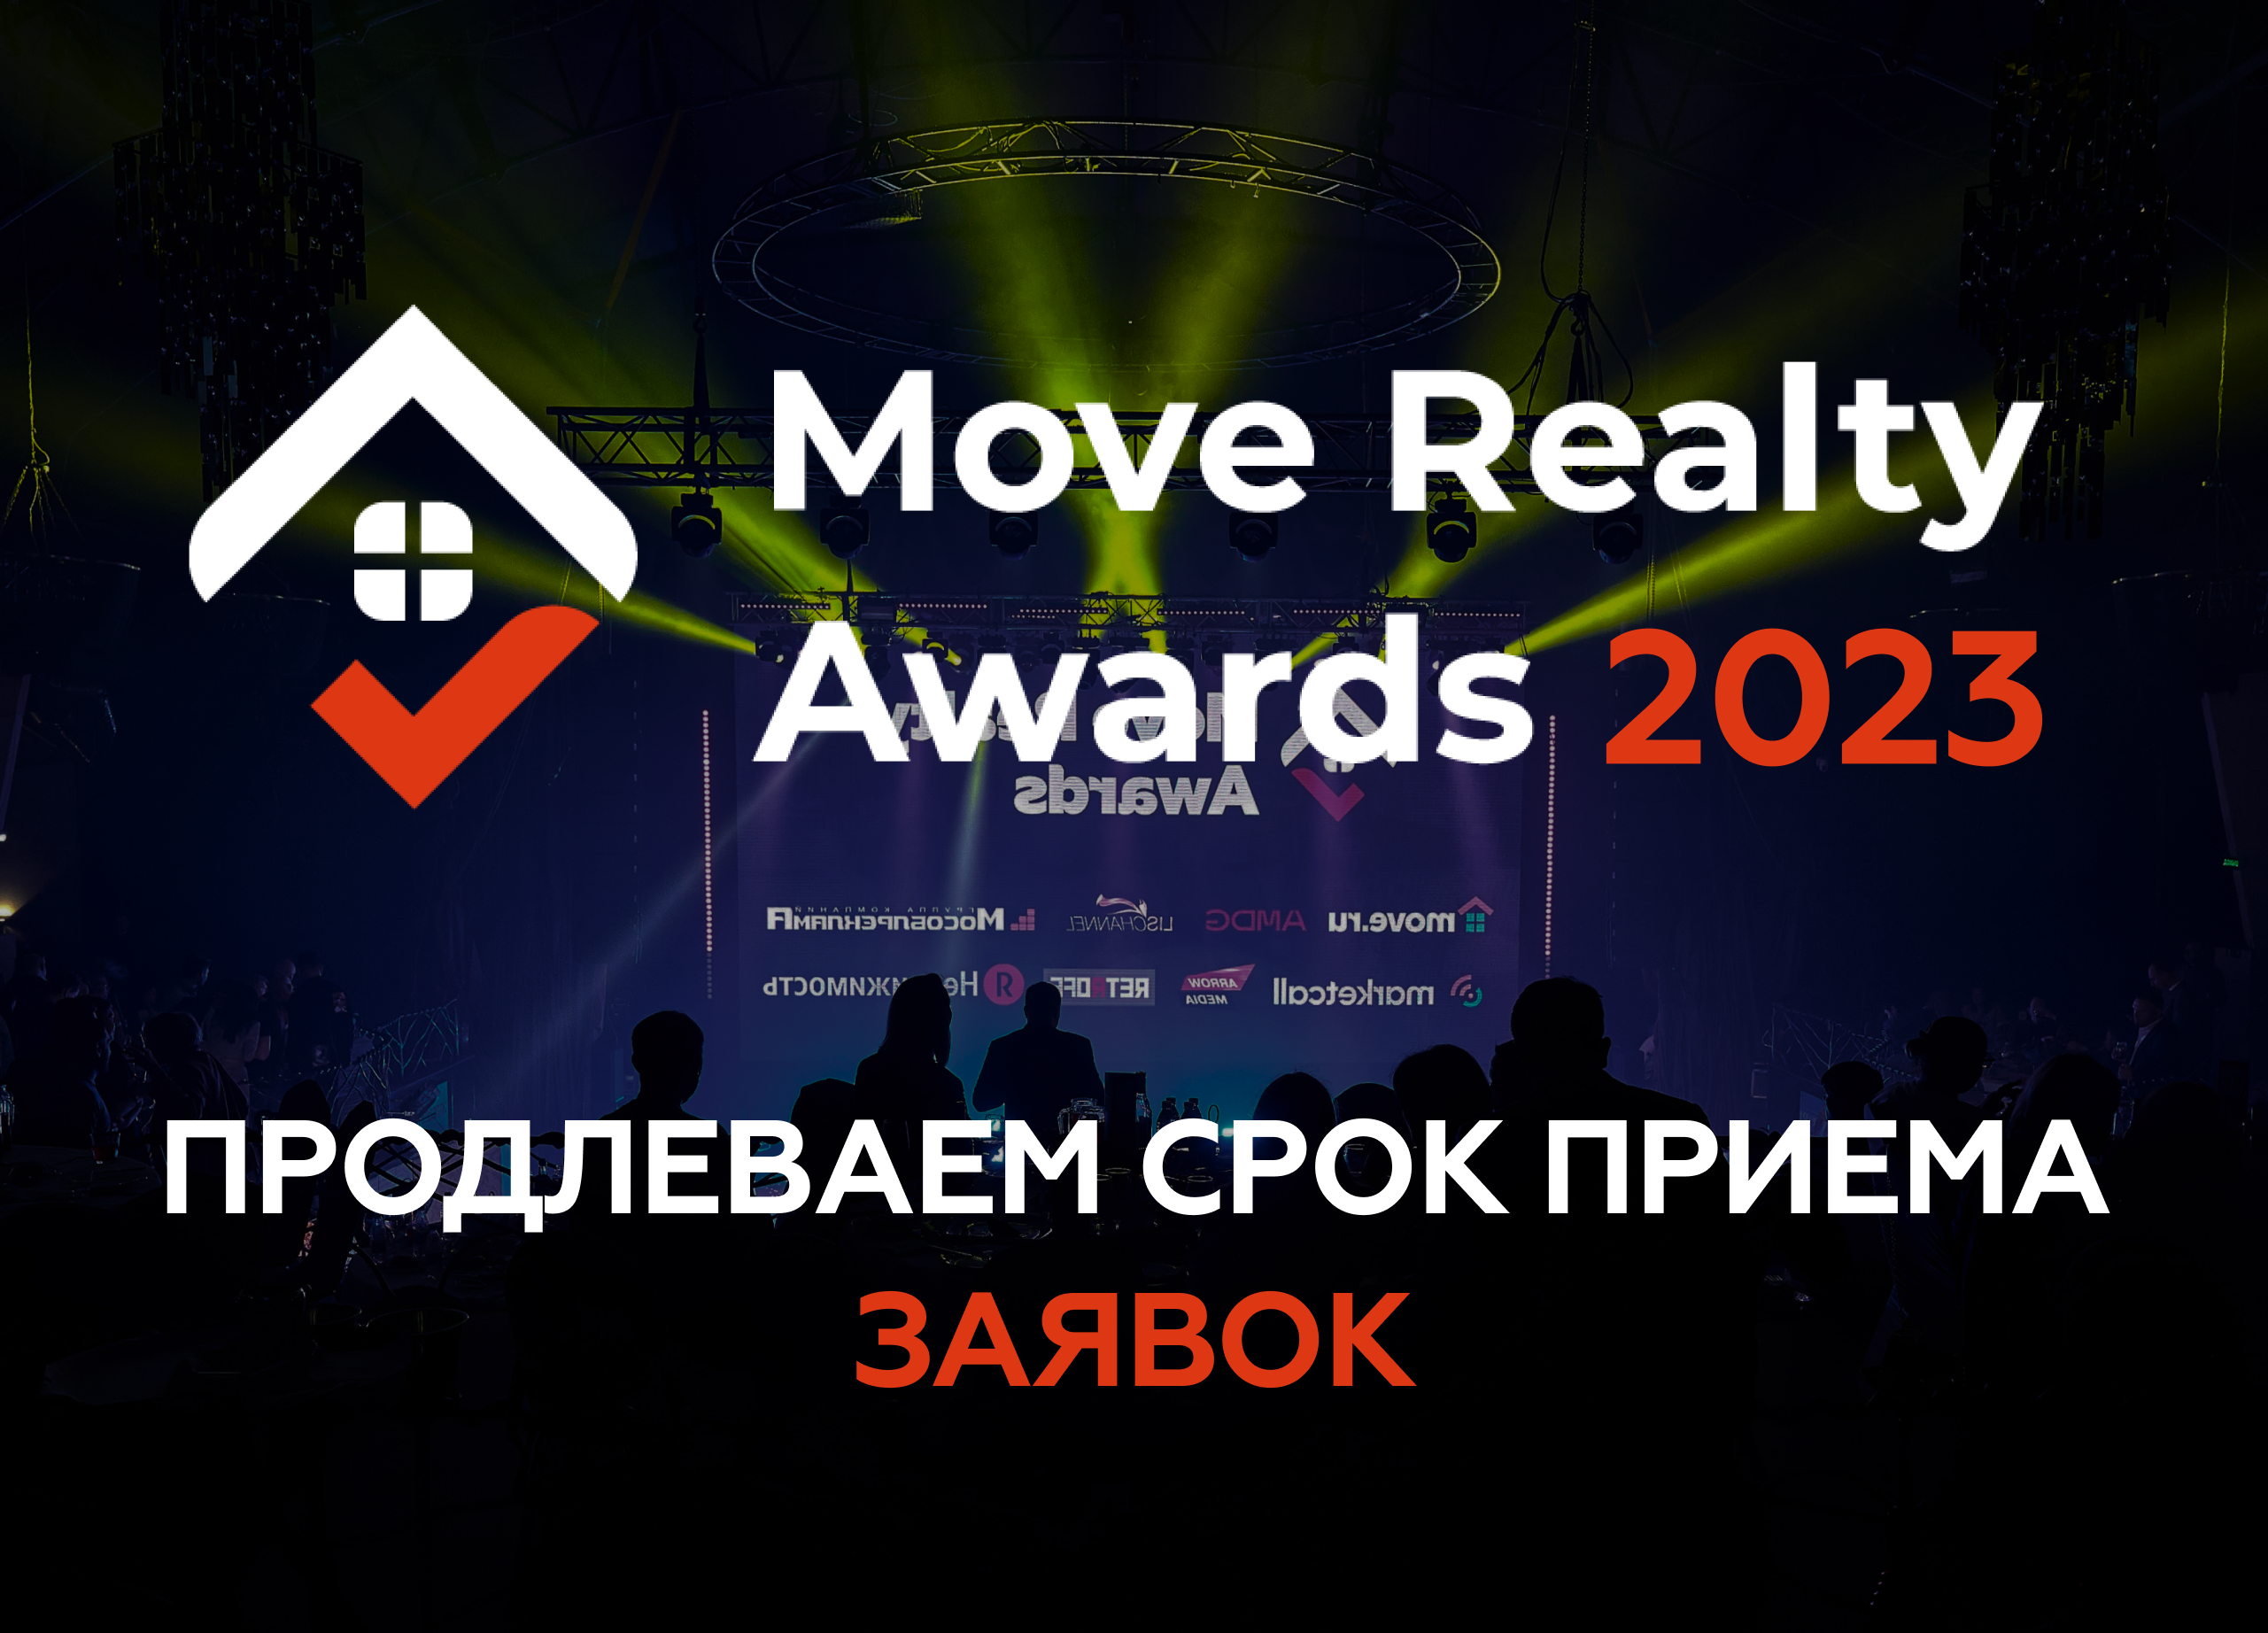 Продлен срок приема заявок на премию Move Realty Awards 2023